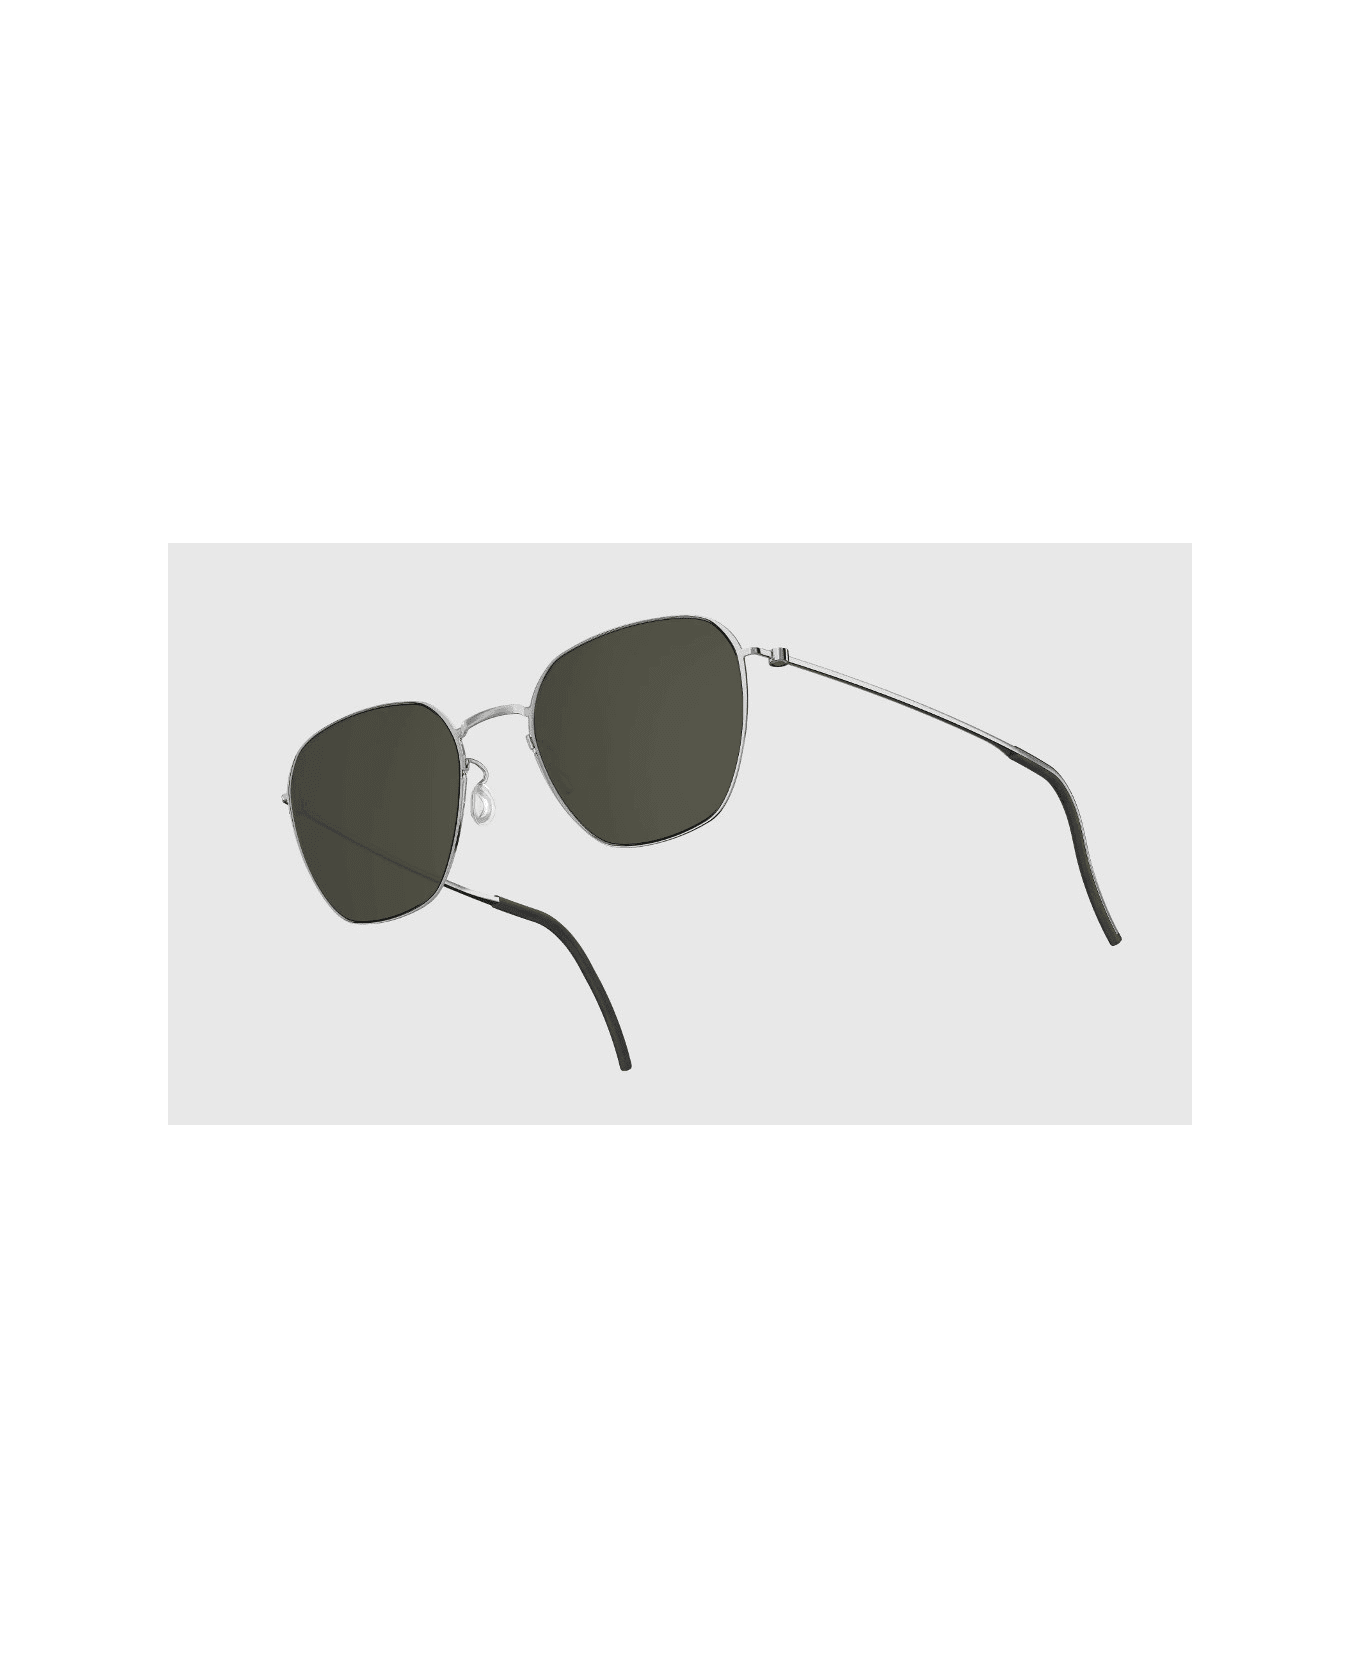 LINDBERG SR8810 P10 Sunglasses - Grigio lenti grigie サングラス